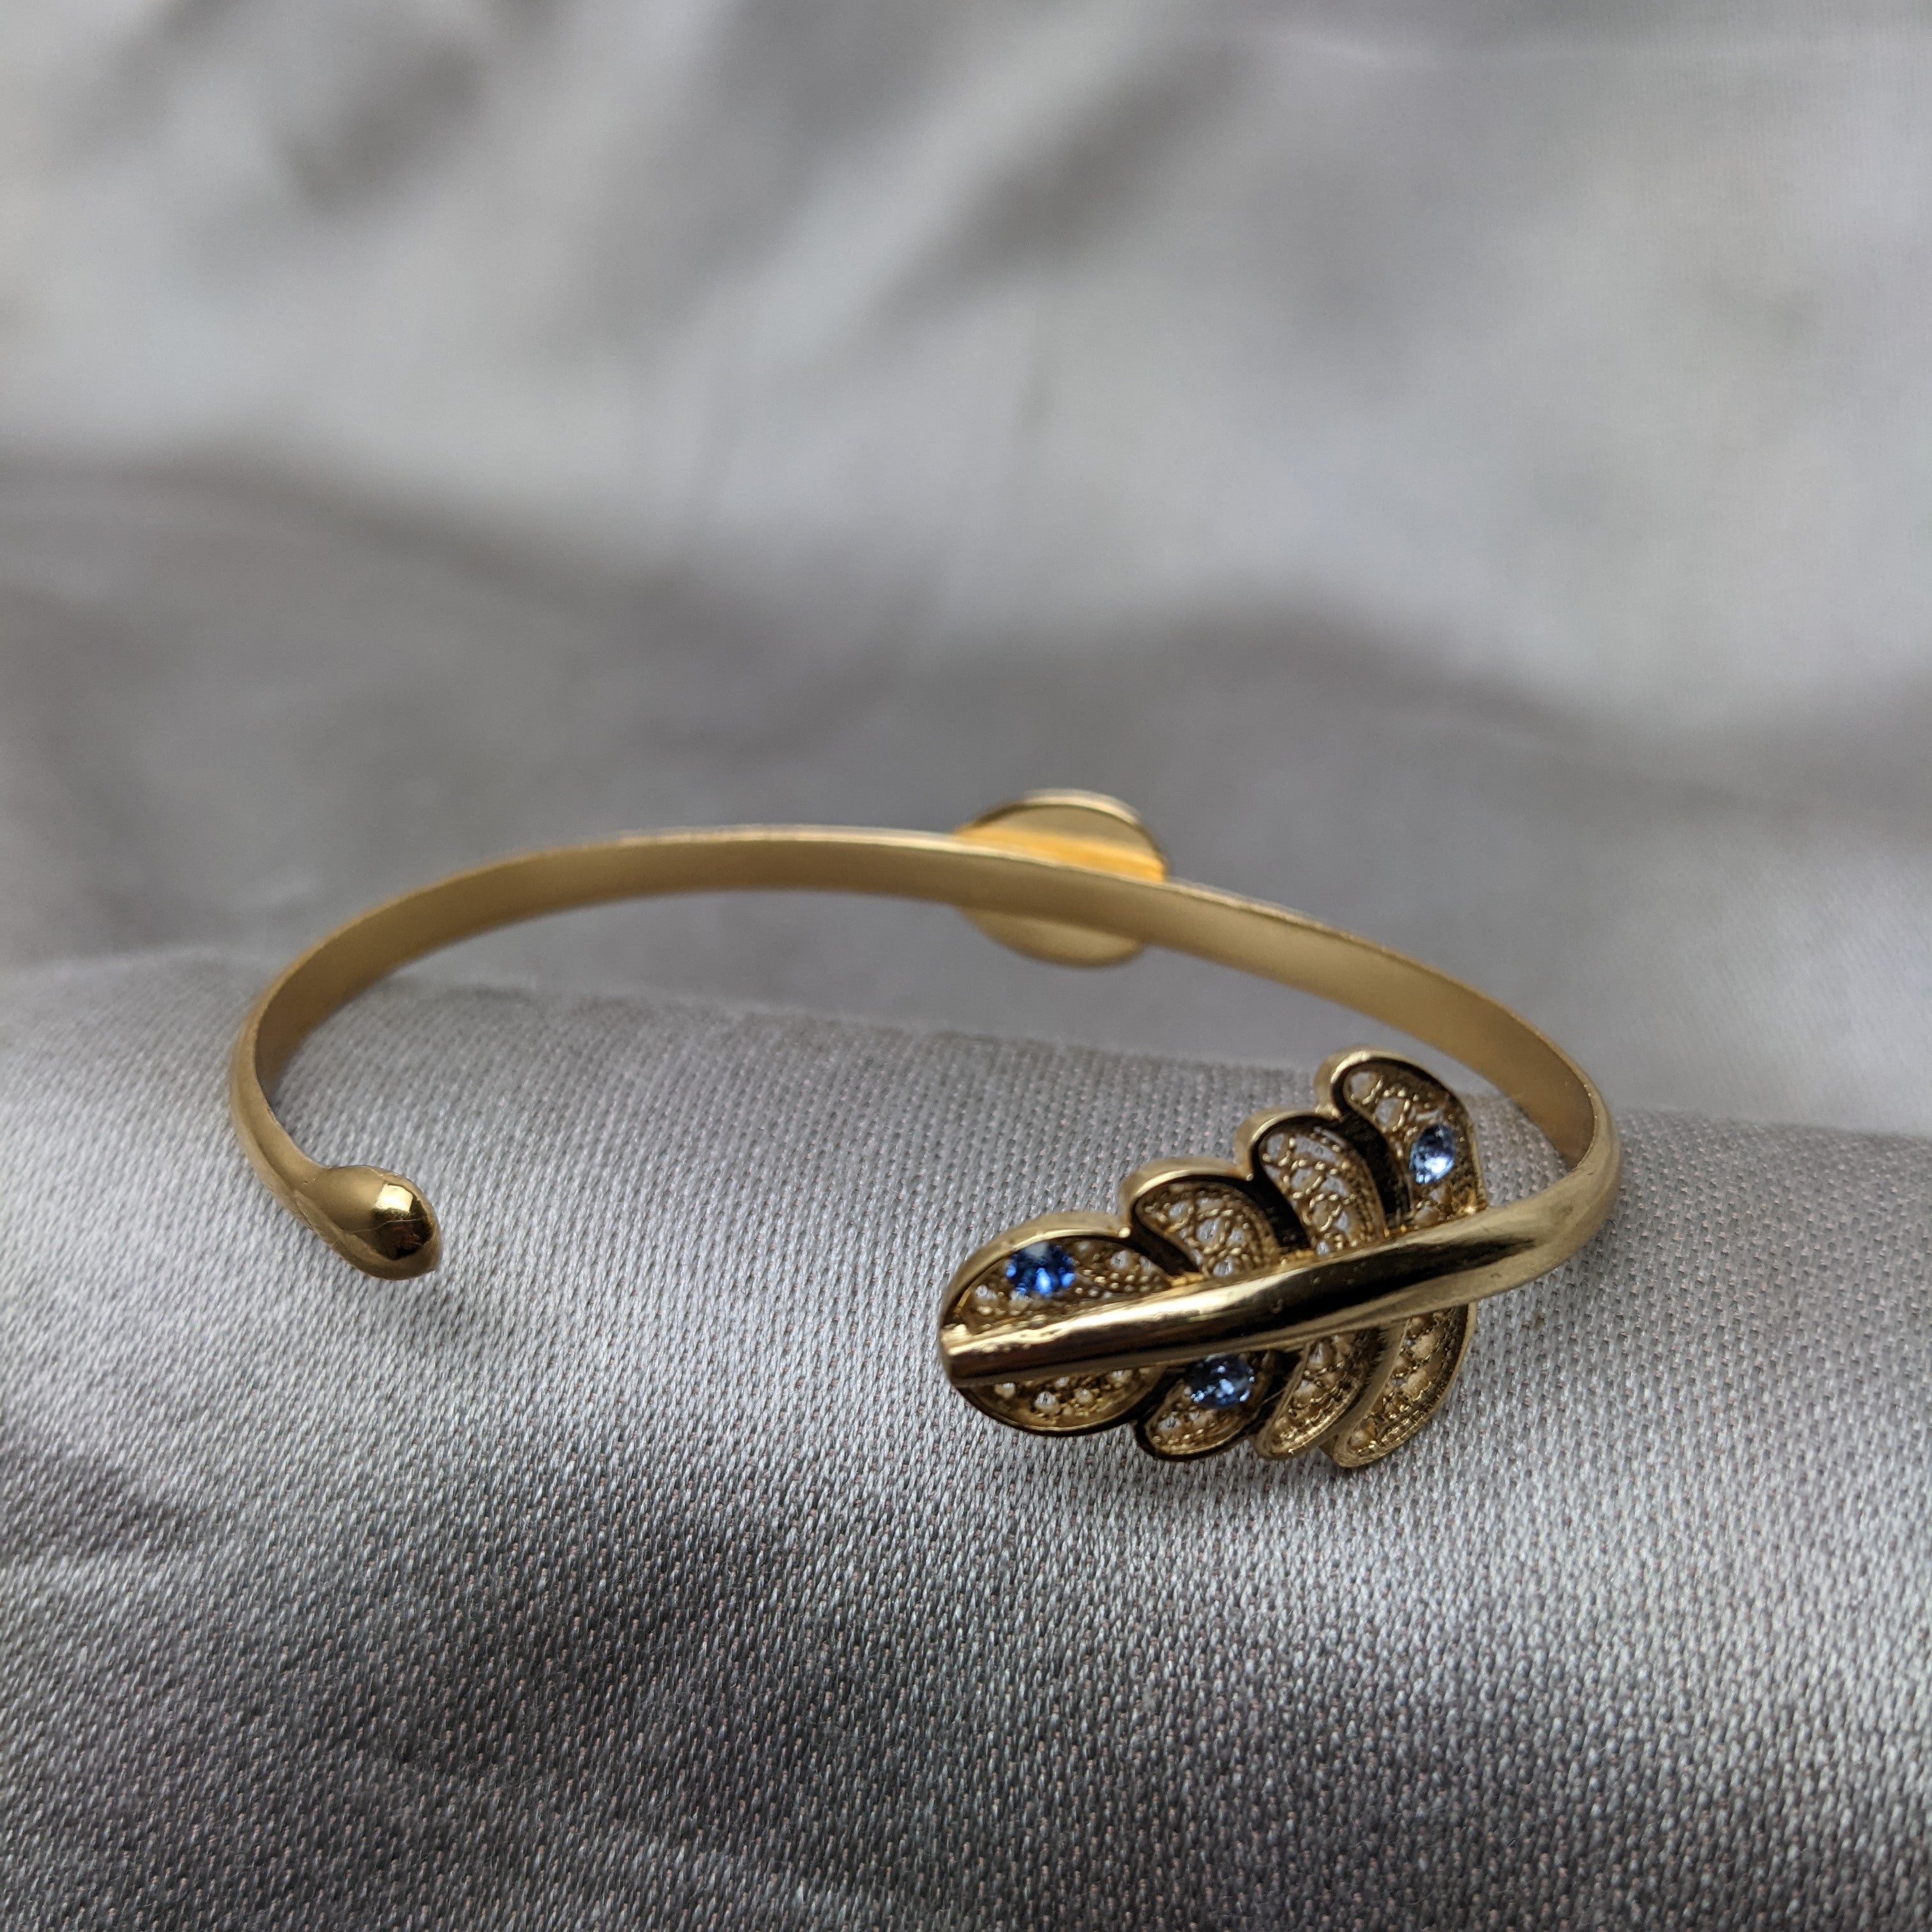 FEELIGRY - Filigry wrist bracelet - Gold plated